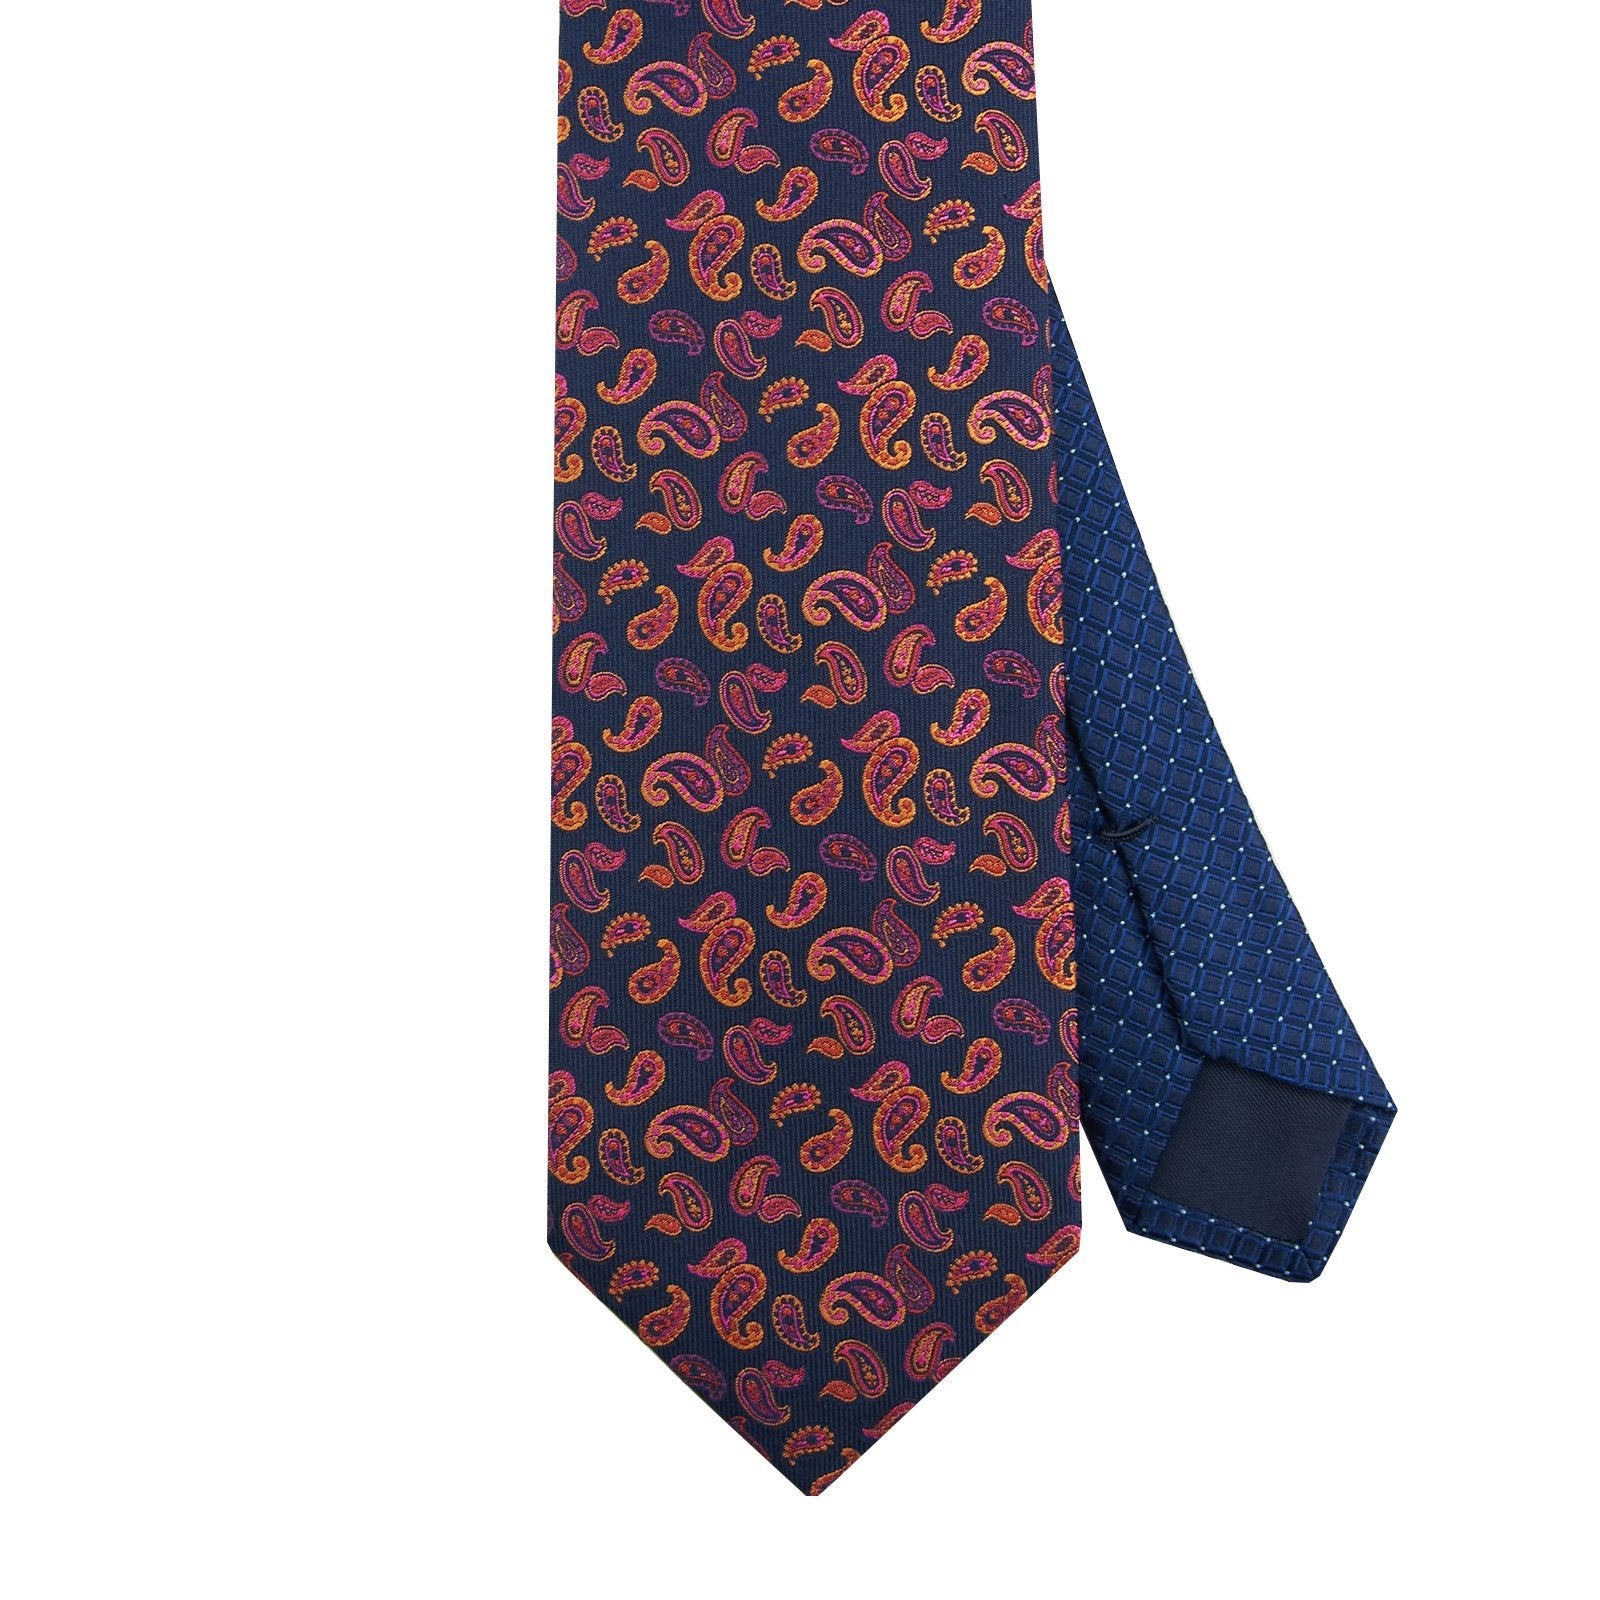 Luxury Orange Paisley Tie - 100% Silk